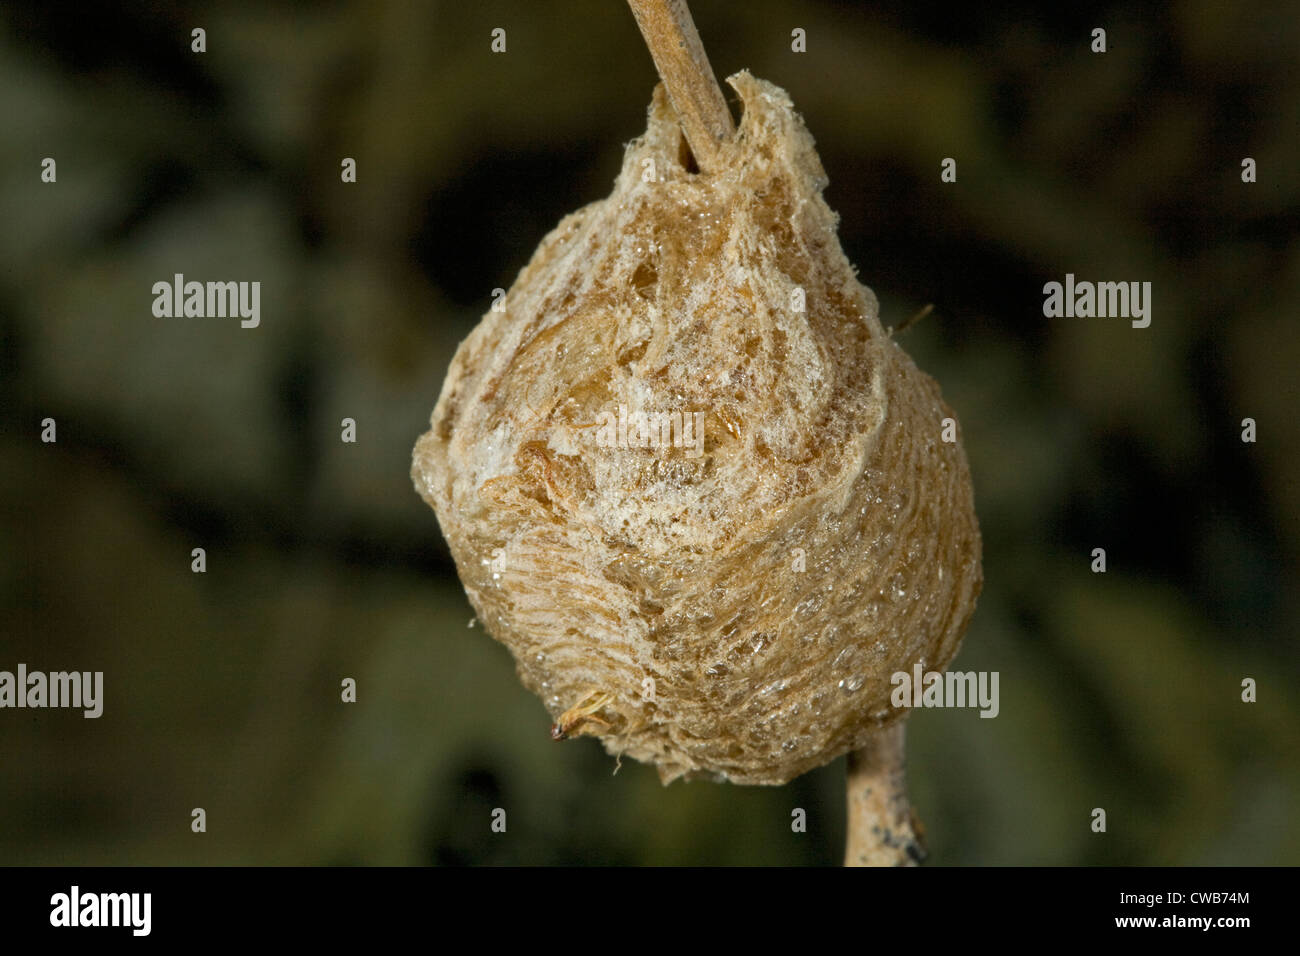 The egg sac of a praying mantis, Mantis religiosa Stock Photo